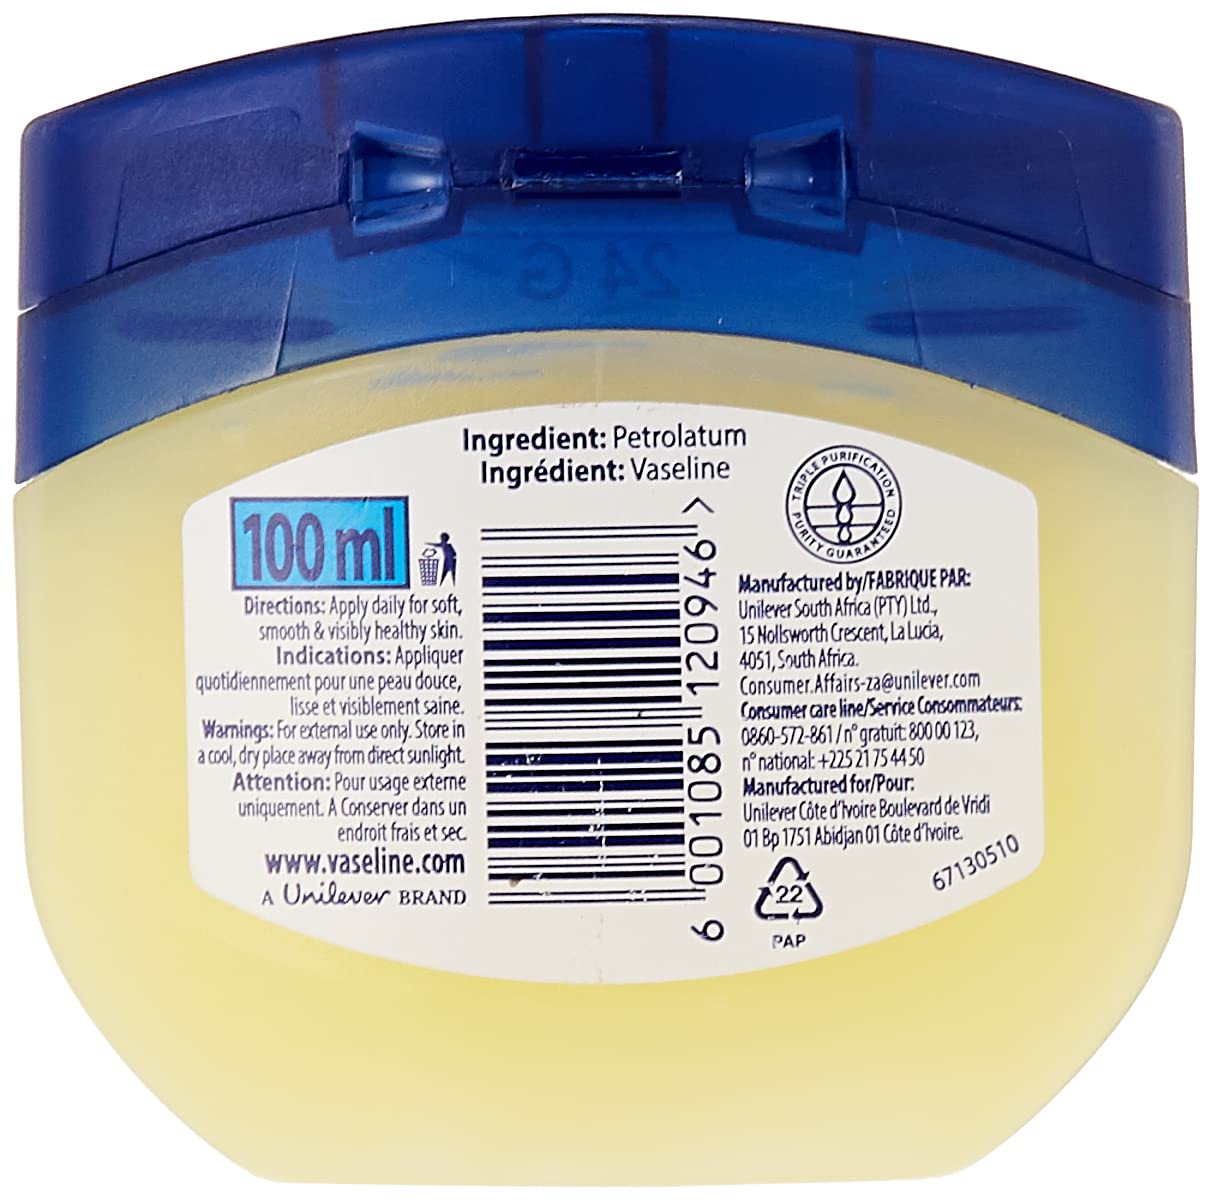 Vaseline Cleansing 1 Blueseal Pure Petroleum Jelly Original 100ml